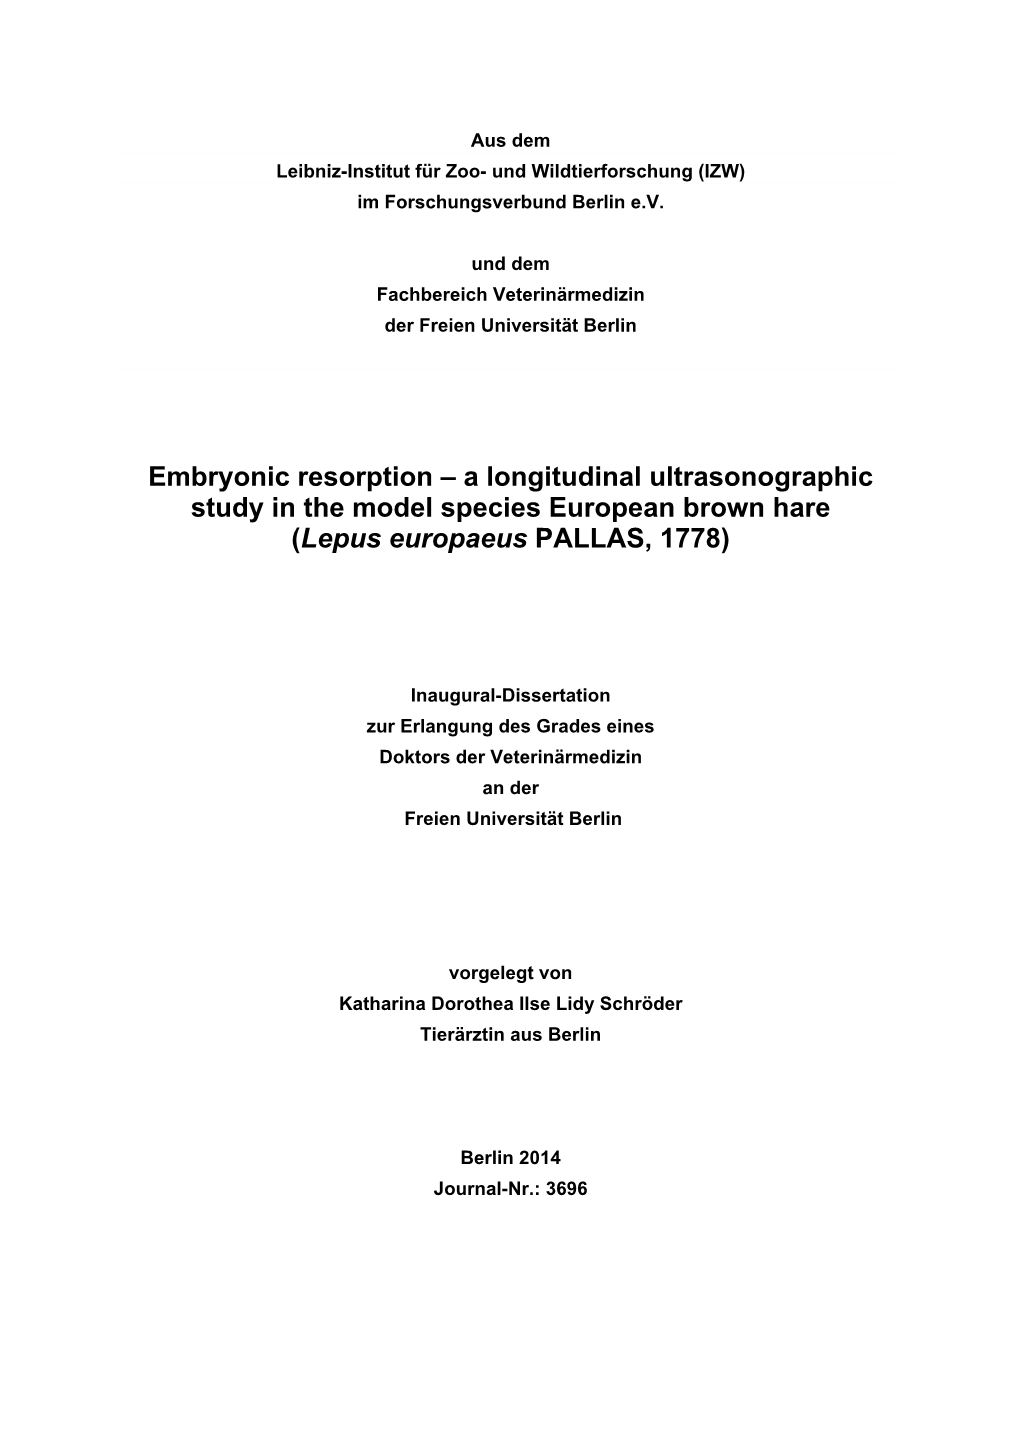 Embryonic Resorption – a Longitudinal Ultrasonographic Study in the Model Species European Brown Hare (Lepus Europaeus PALLAS, 1778)